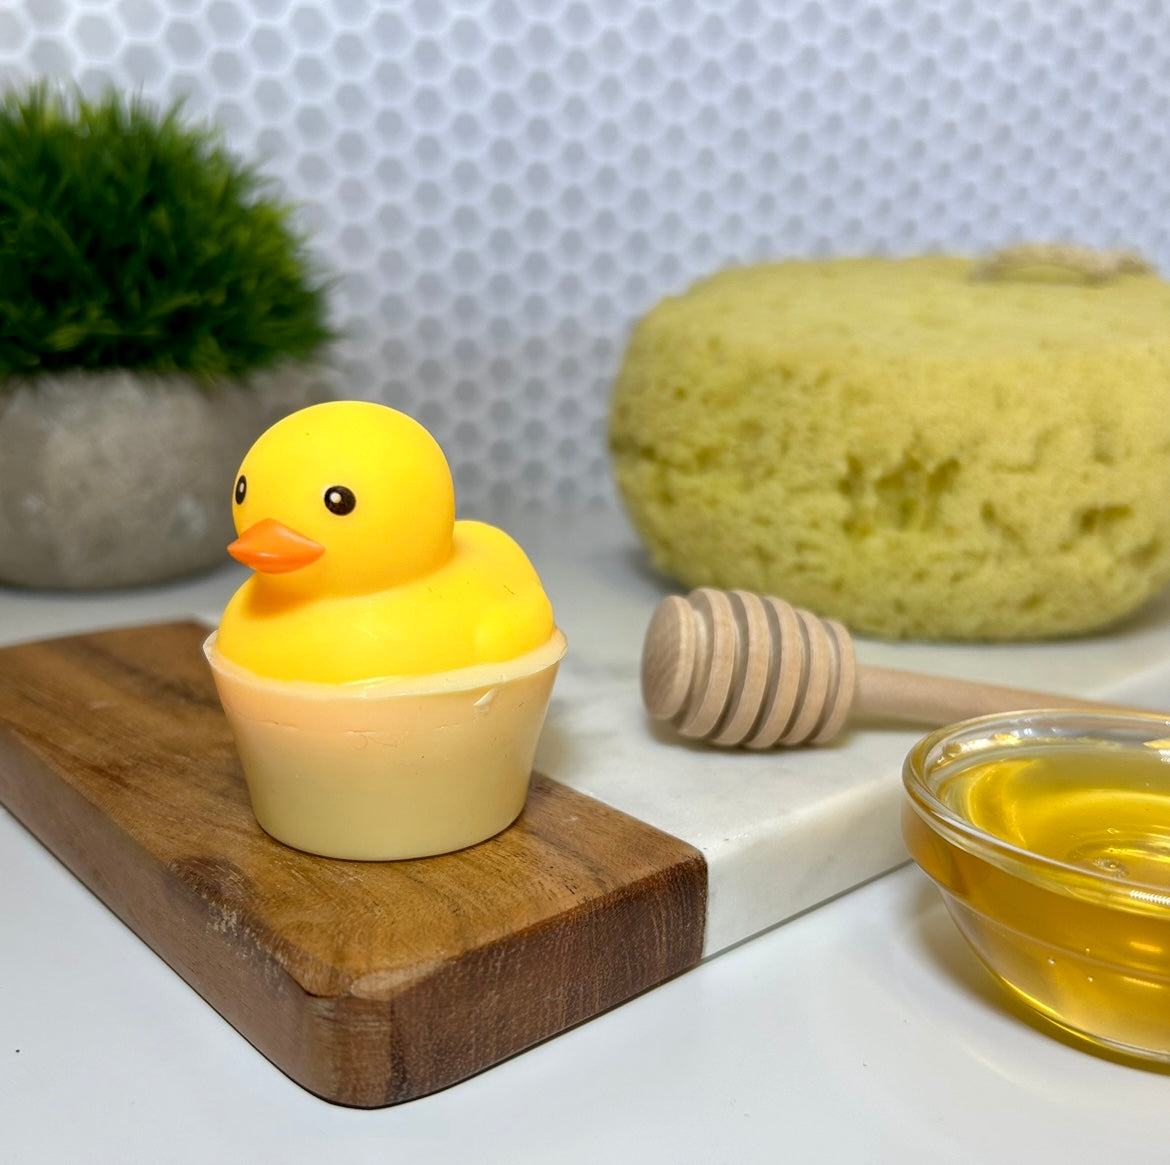 Rubber Duck Soap